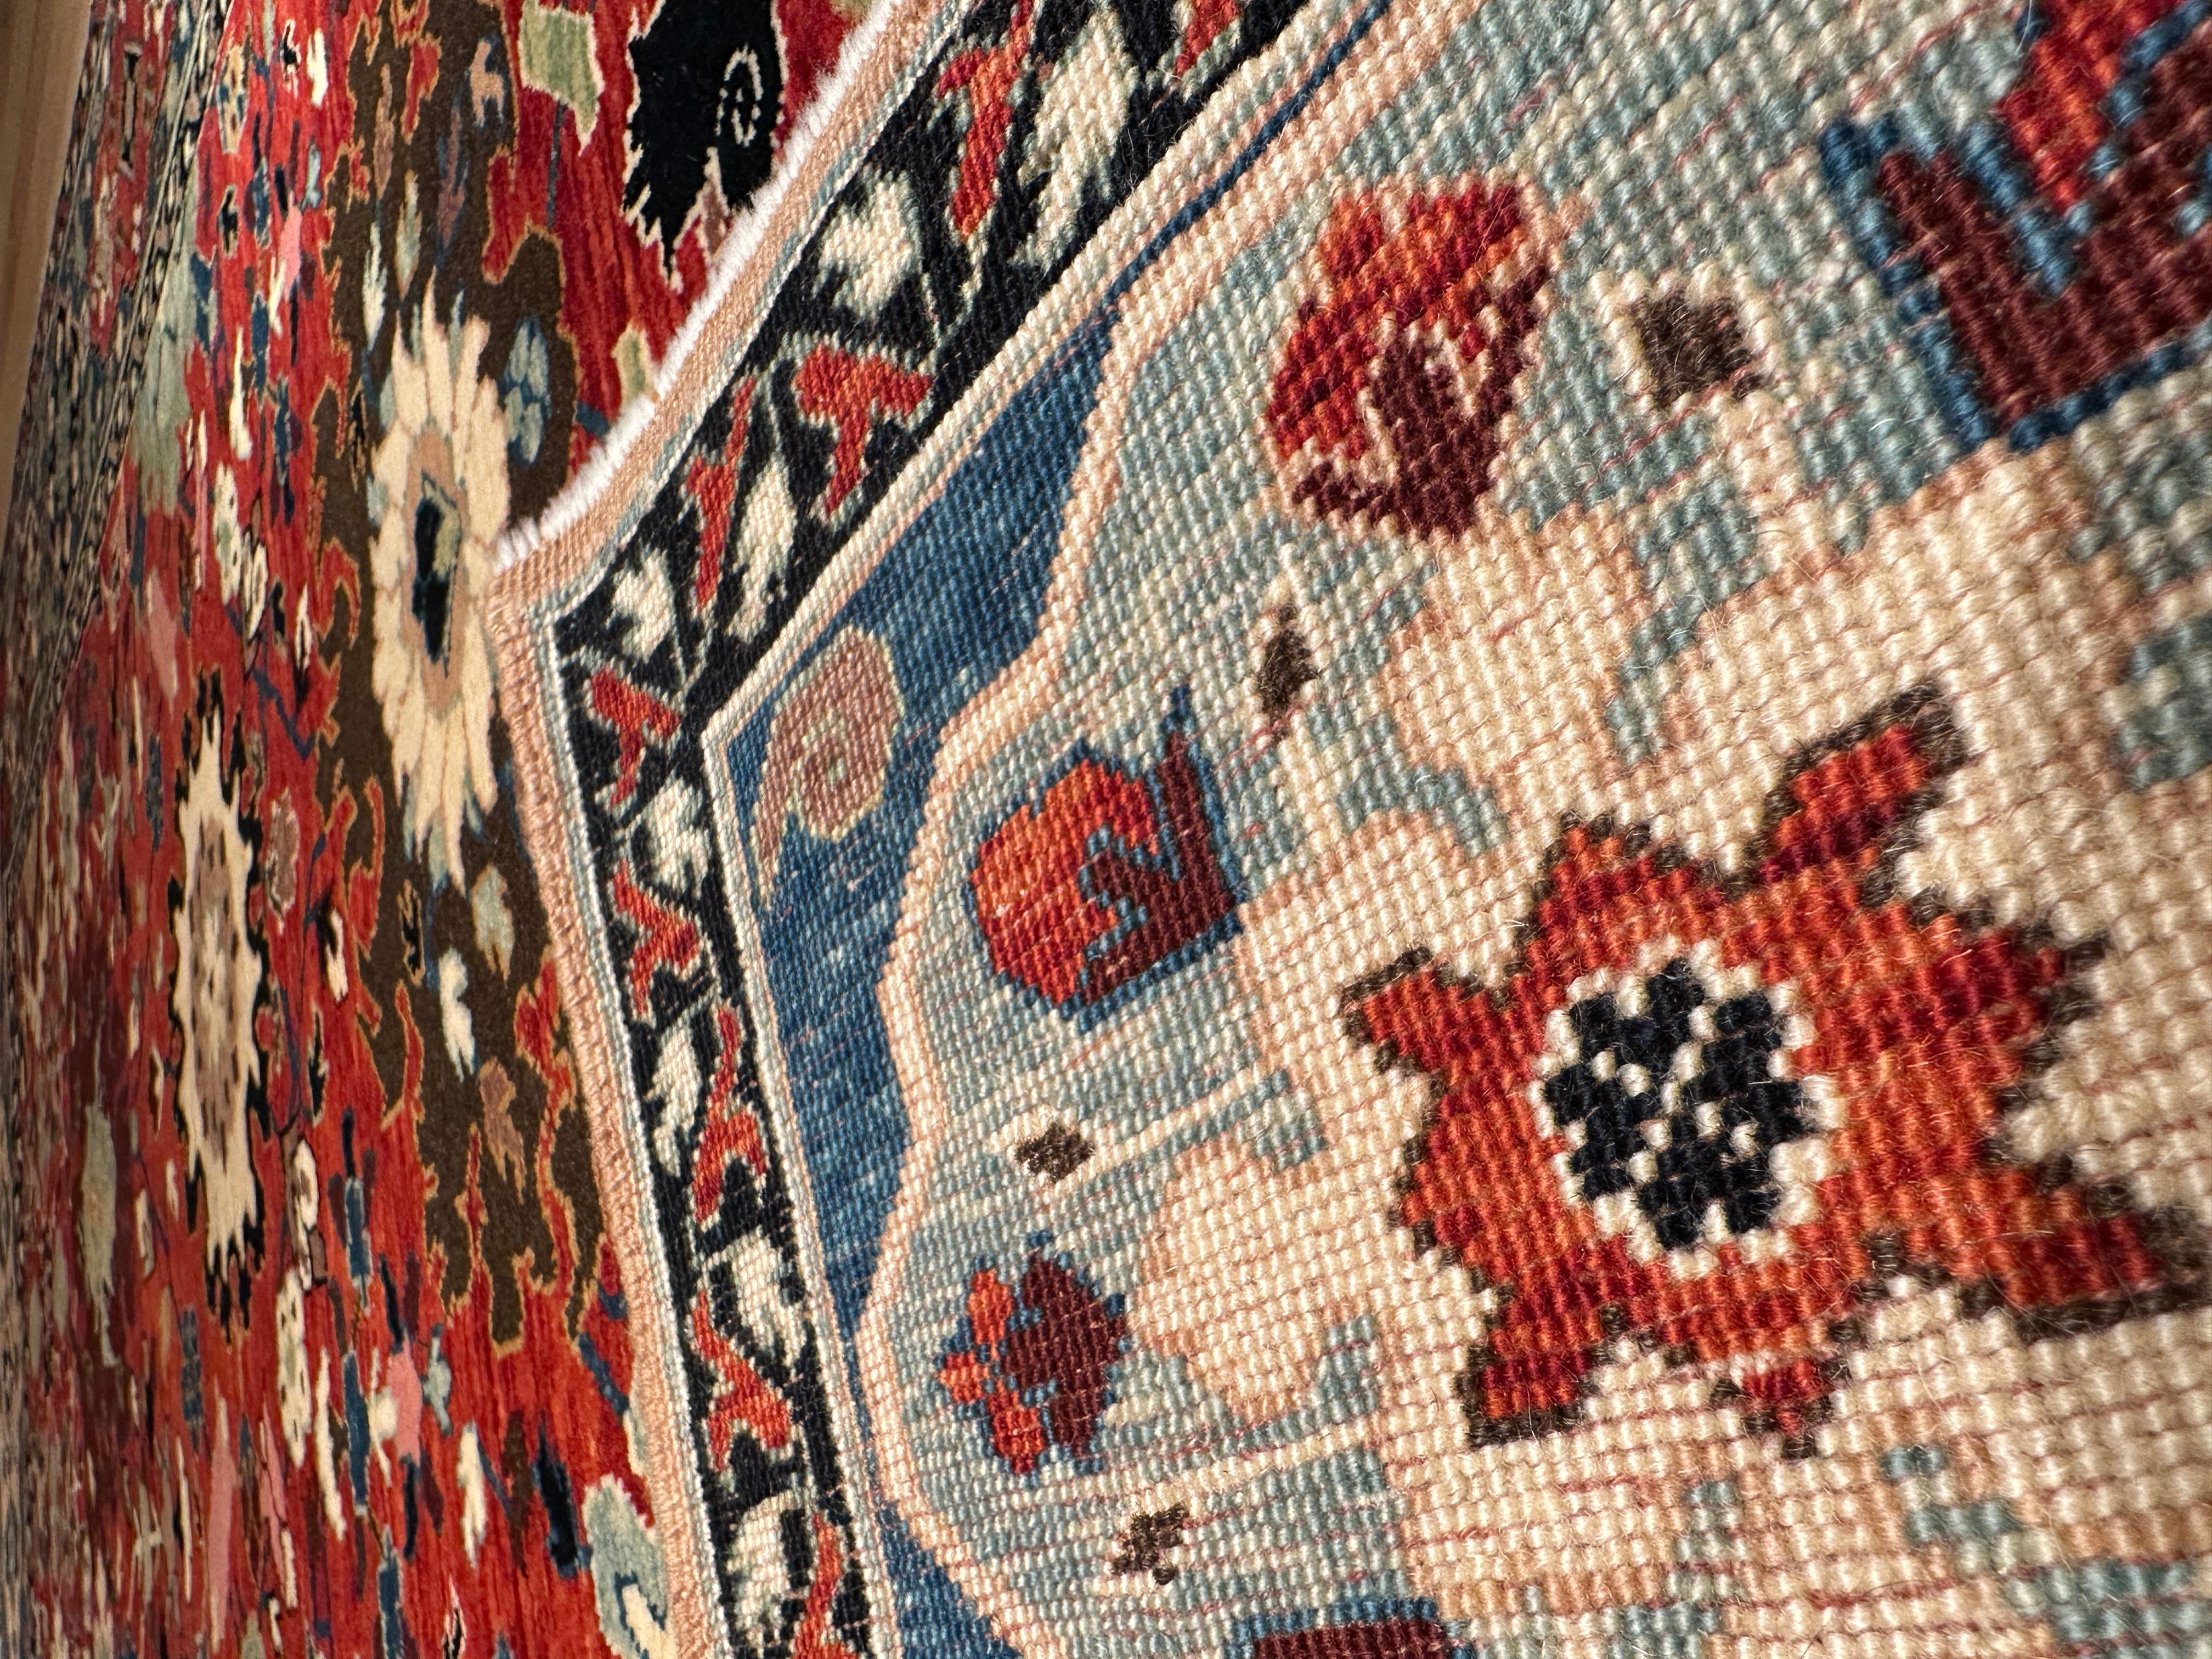 Turkish Ararat Rugs Palmette Lattice Rug, 19th Century Revival Carpet, Natural Dyed For Sale